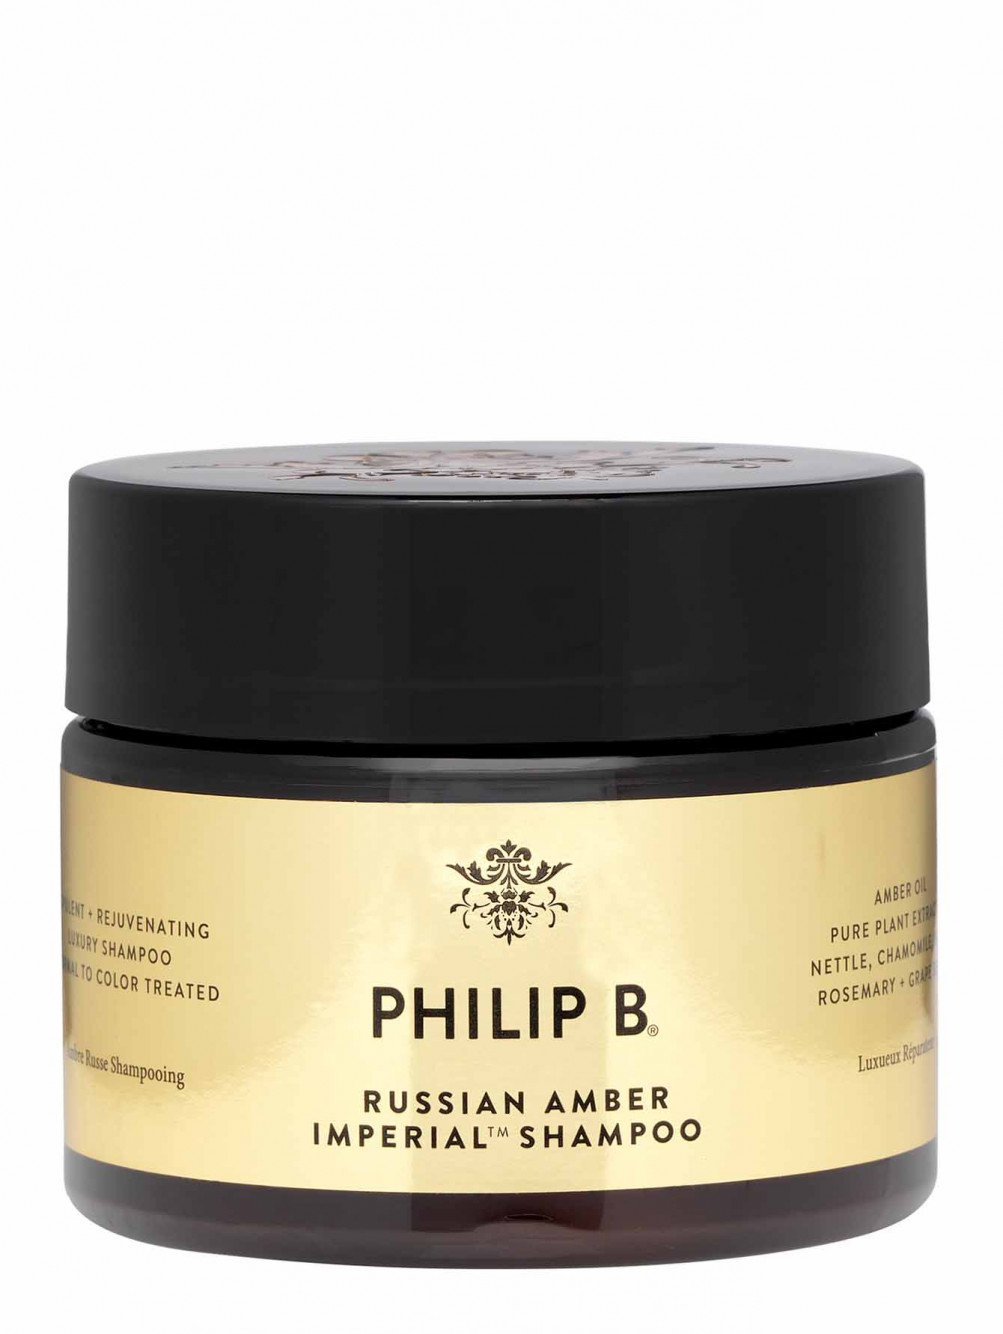 Шампунь для волос Russian Amber Imperial Shampoo, 355 мл - Общий вид